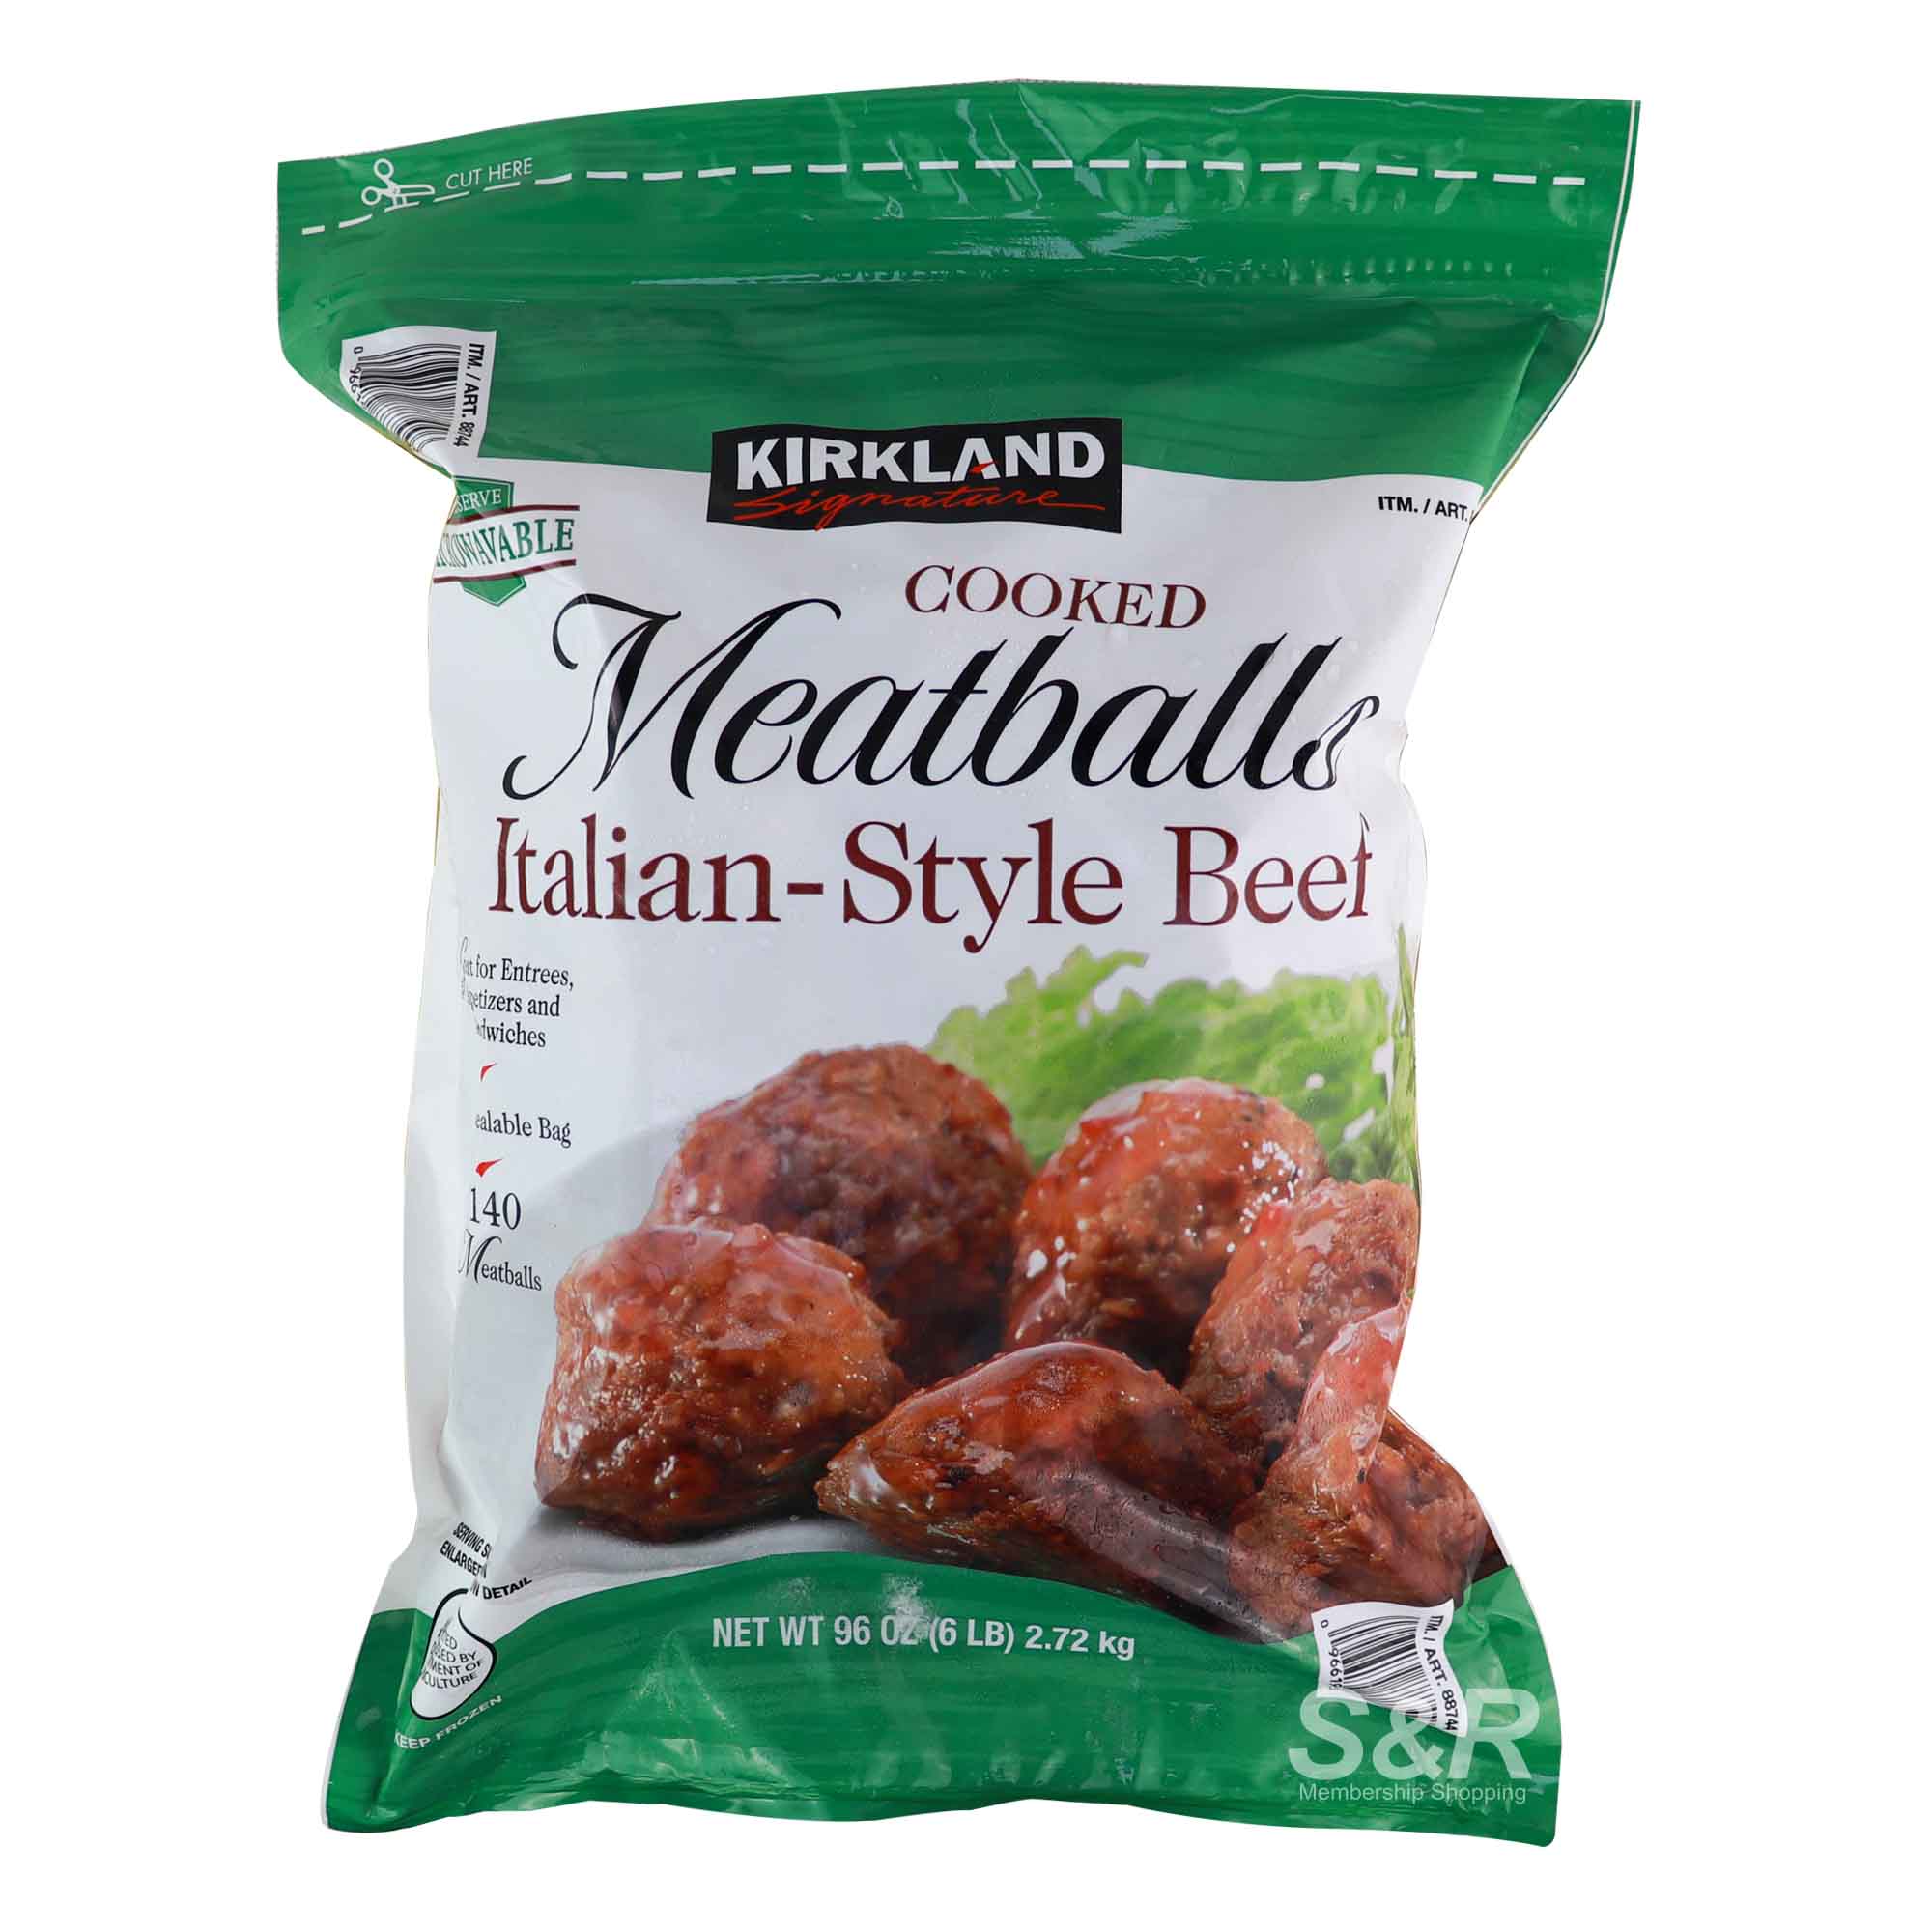 Kirkland Signature Cooked Meatballs Italian-Style Beef 2.72kg